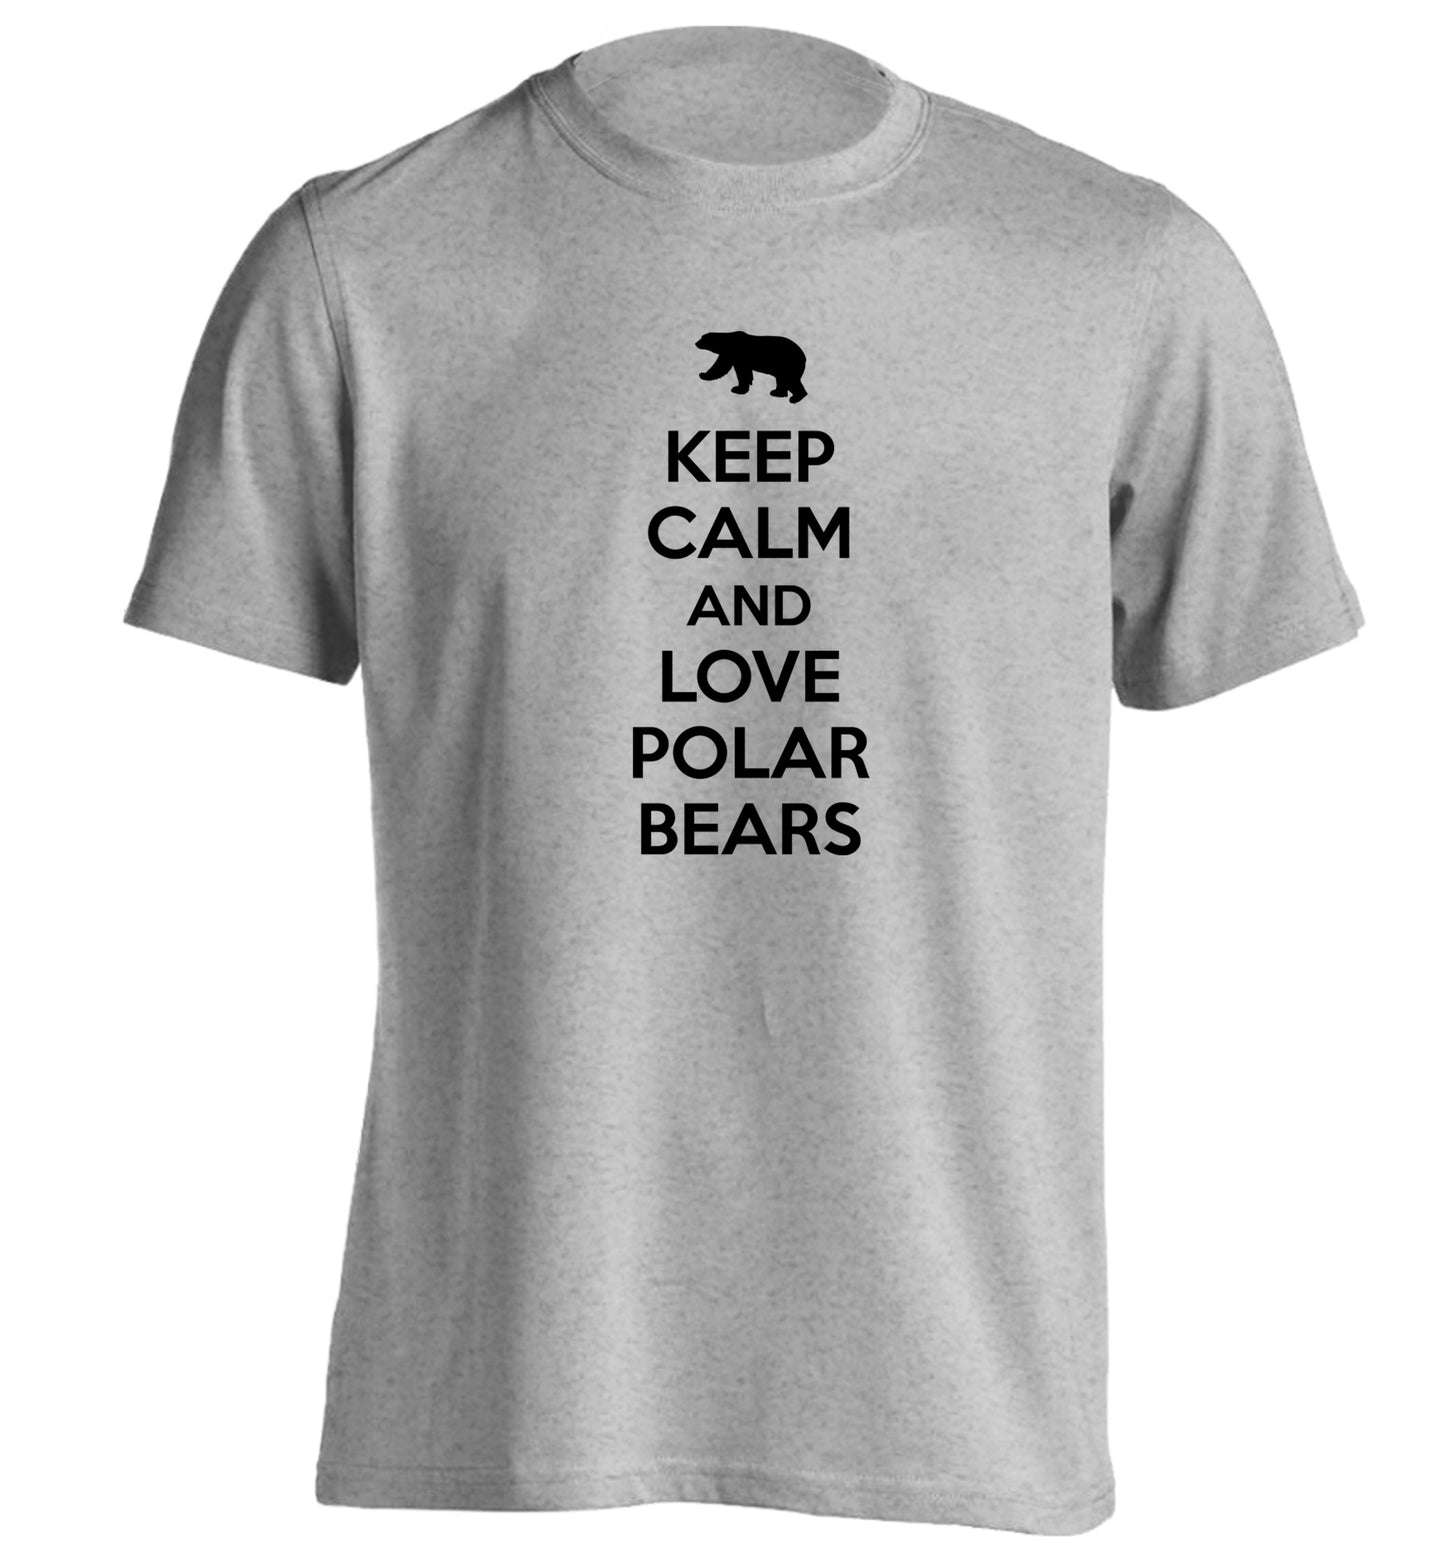 Keep calm and love polar bears adults unisex grey Tshirt 2XL